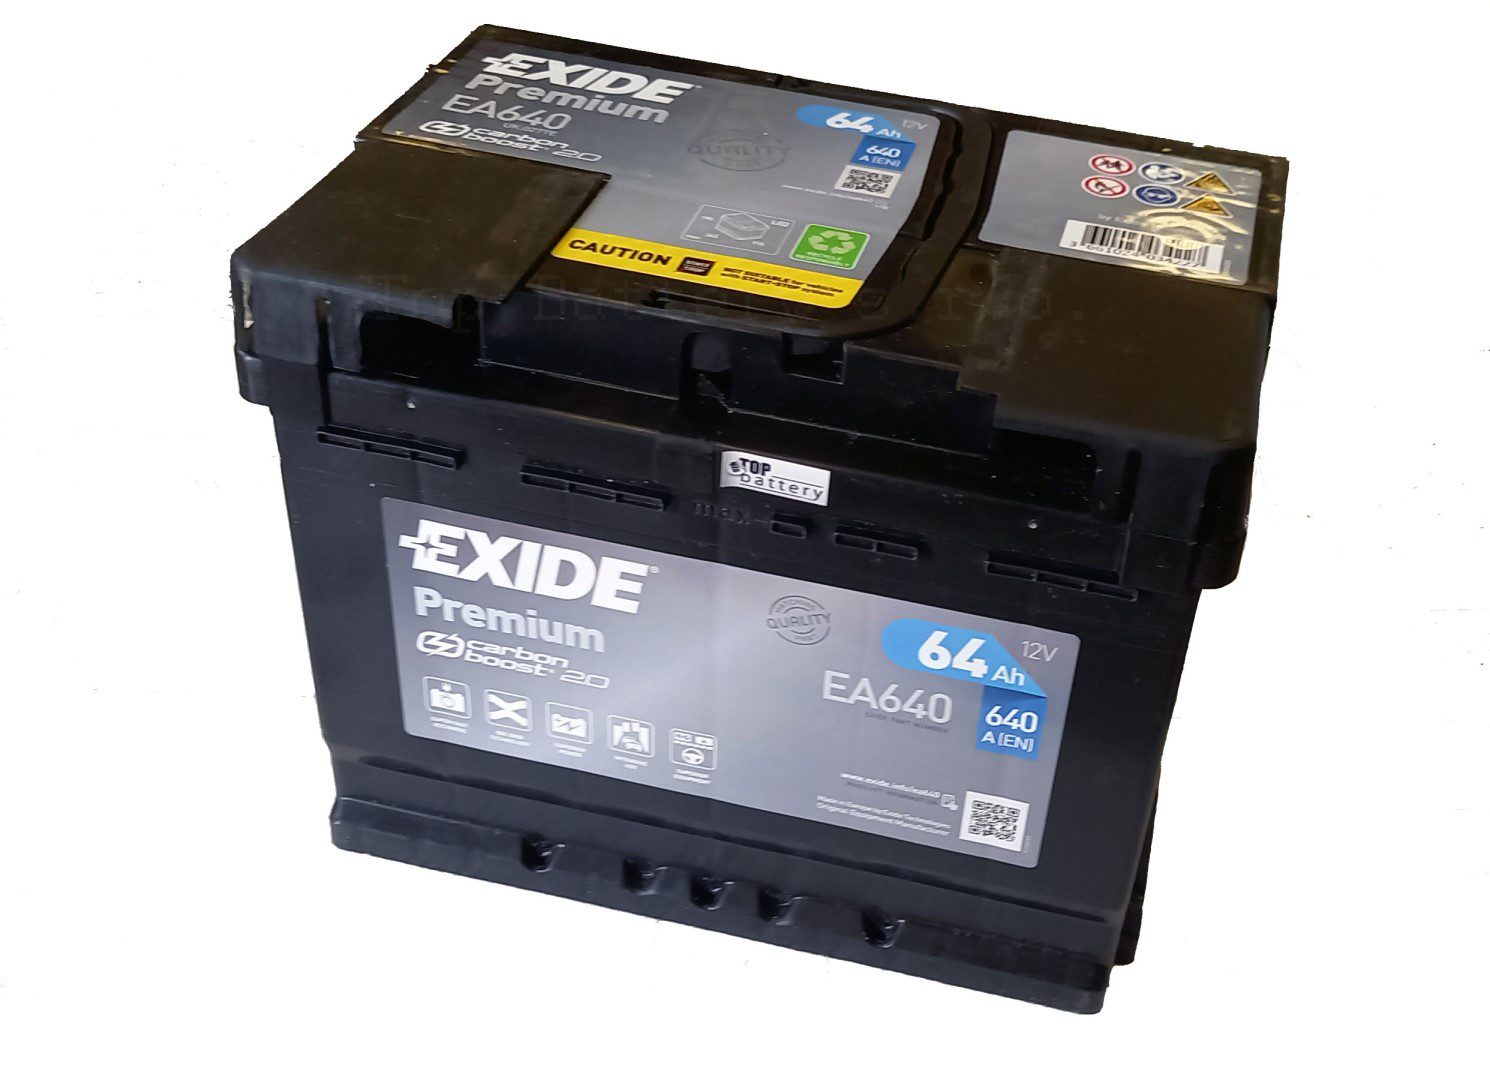 Exide Premium Carbon Boost EA640 Startbatteri